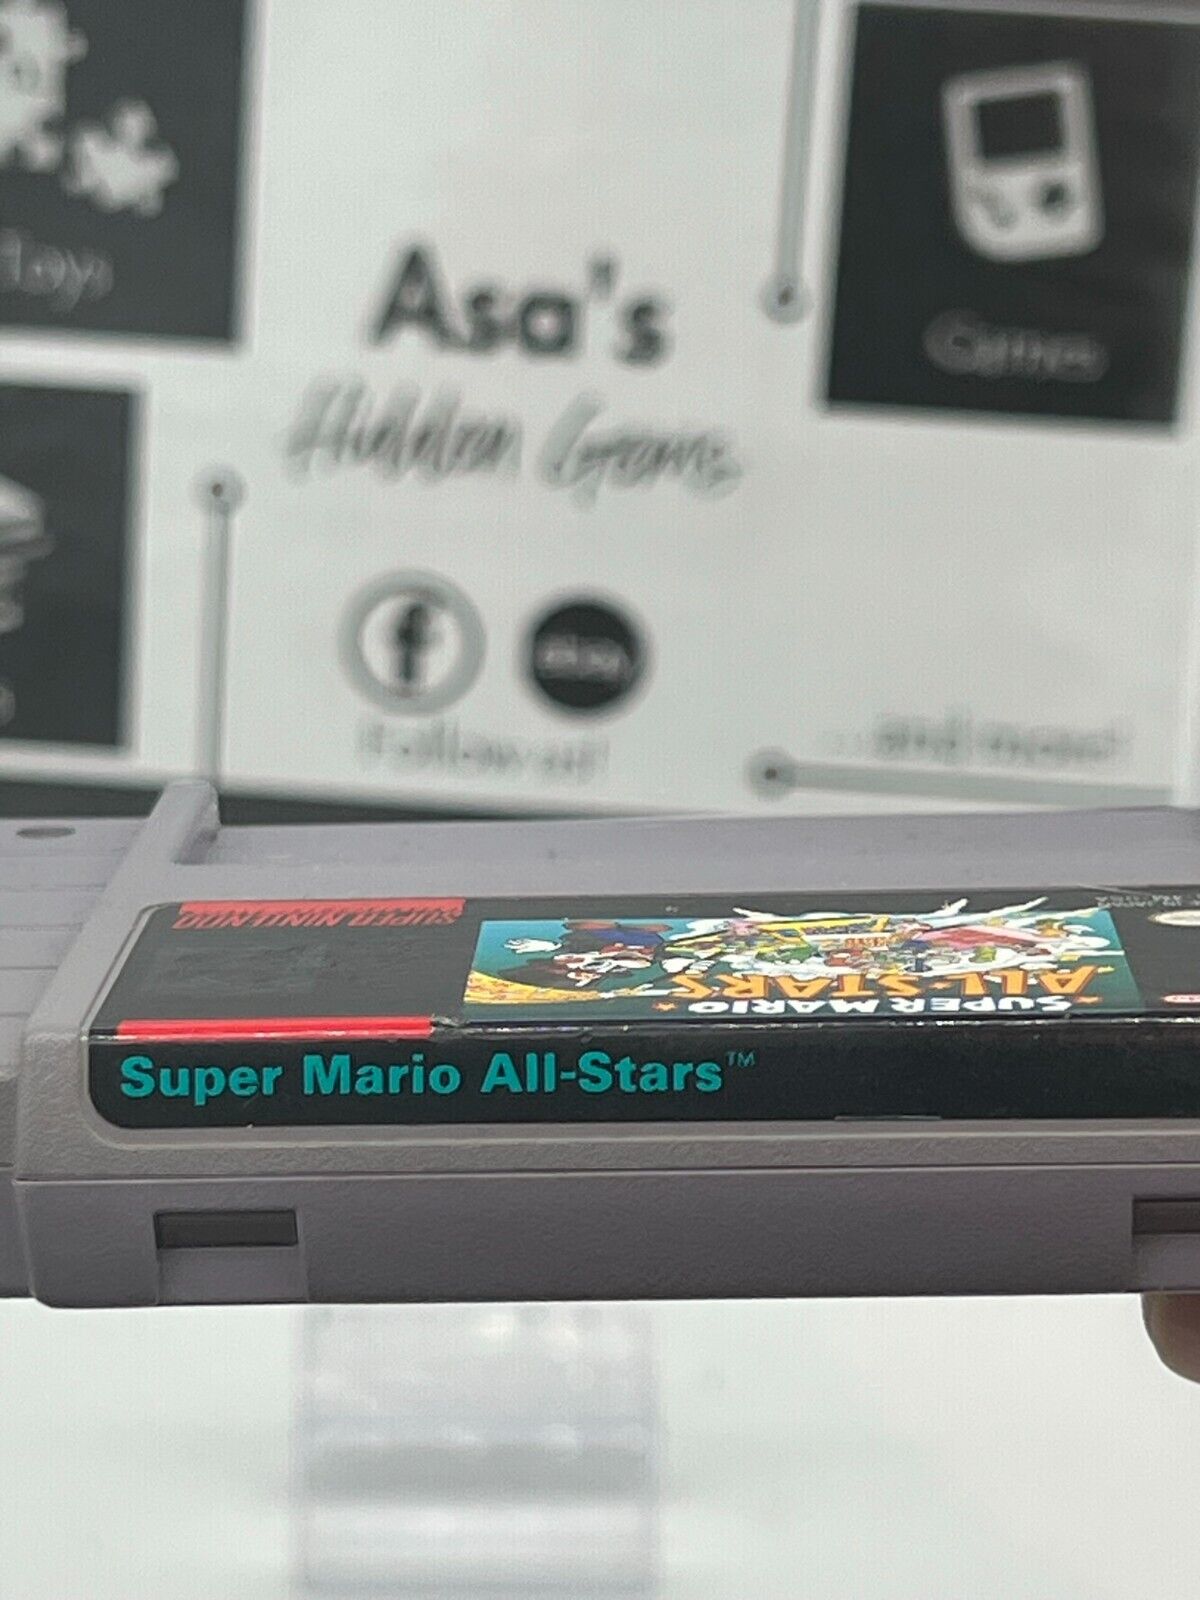 Super Mario All-Stars (Super Nintendo Entertainment System, 1993)